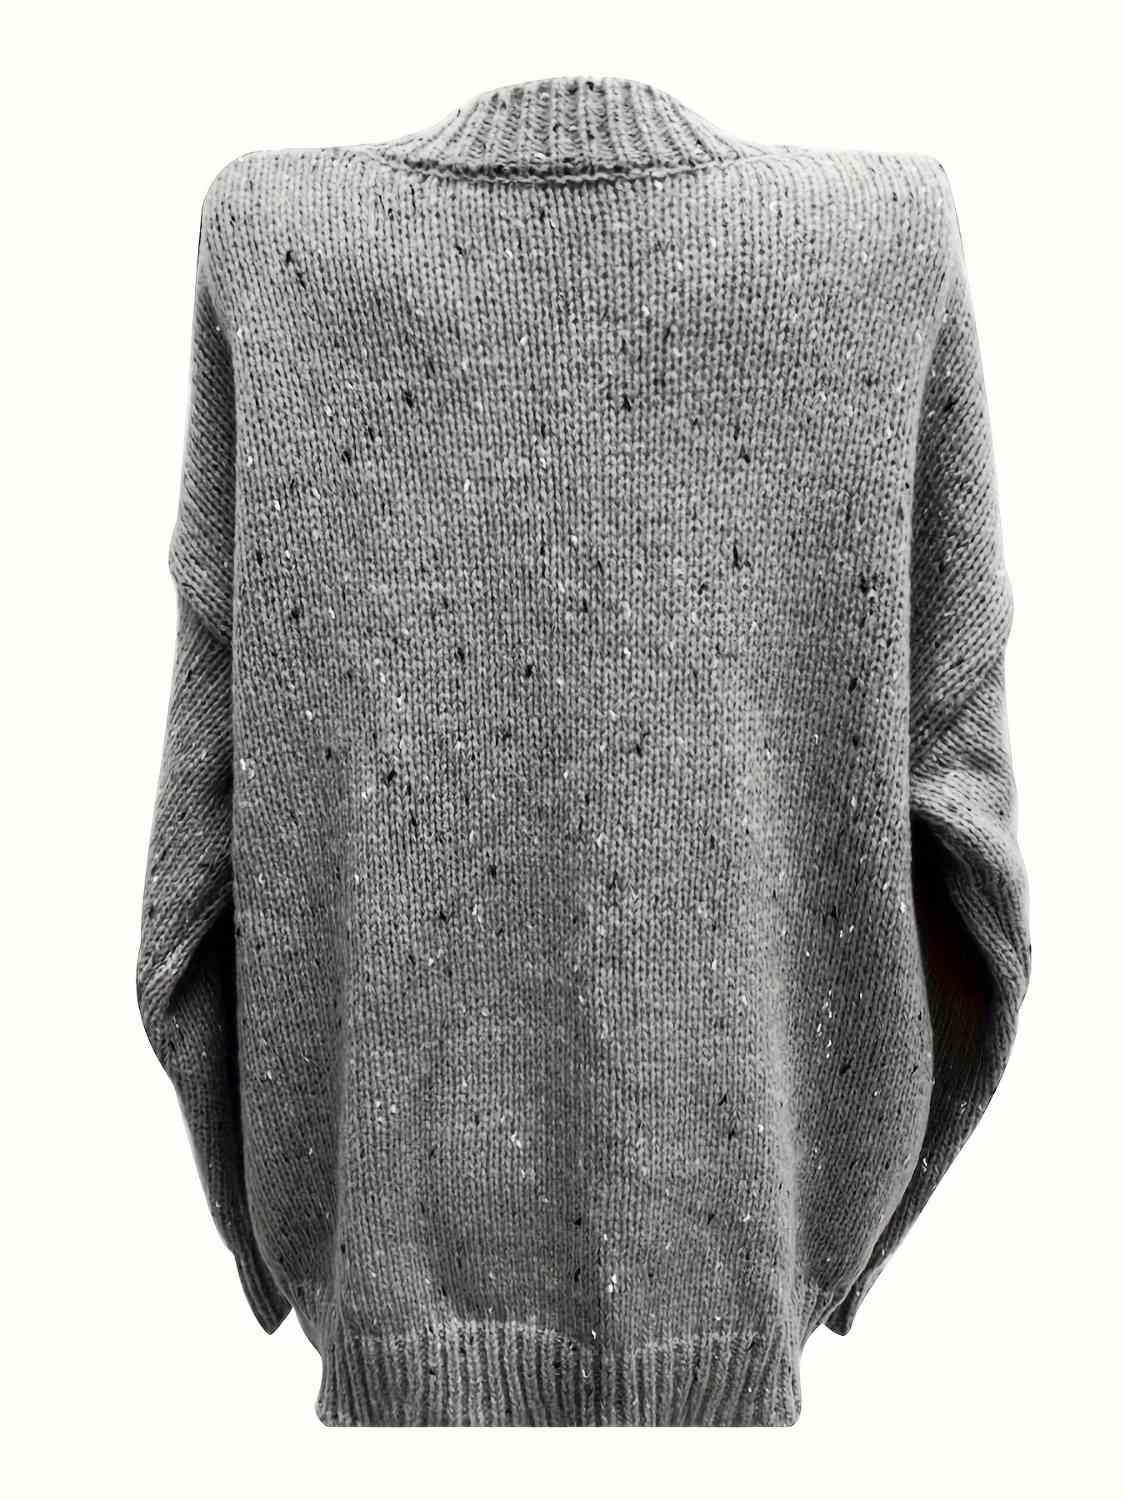 Charcoal Plus Size Mock Neck Sweater - MXSTUDIO.COM